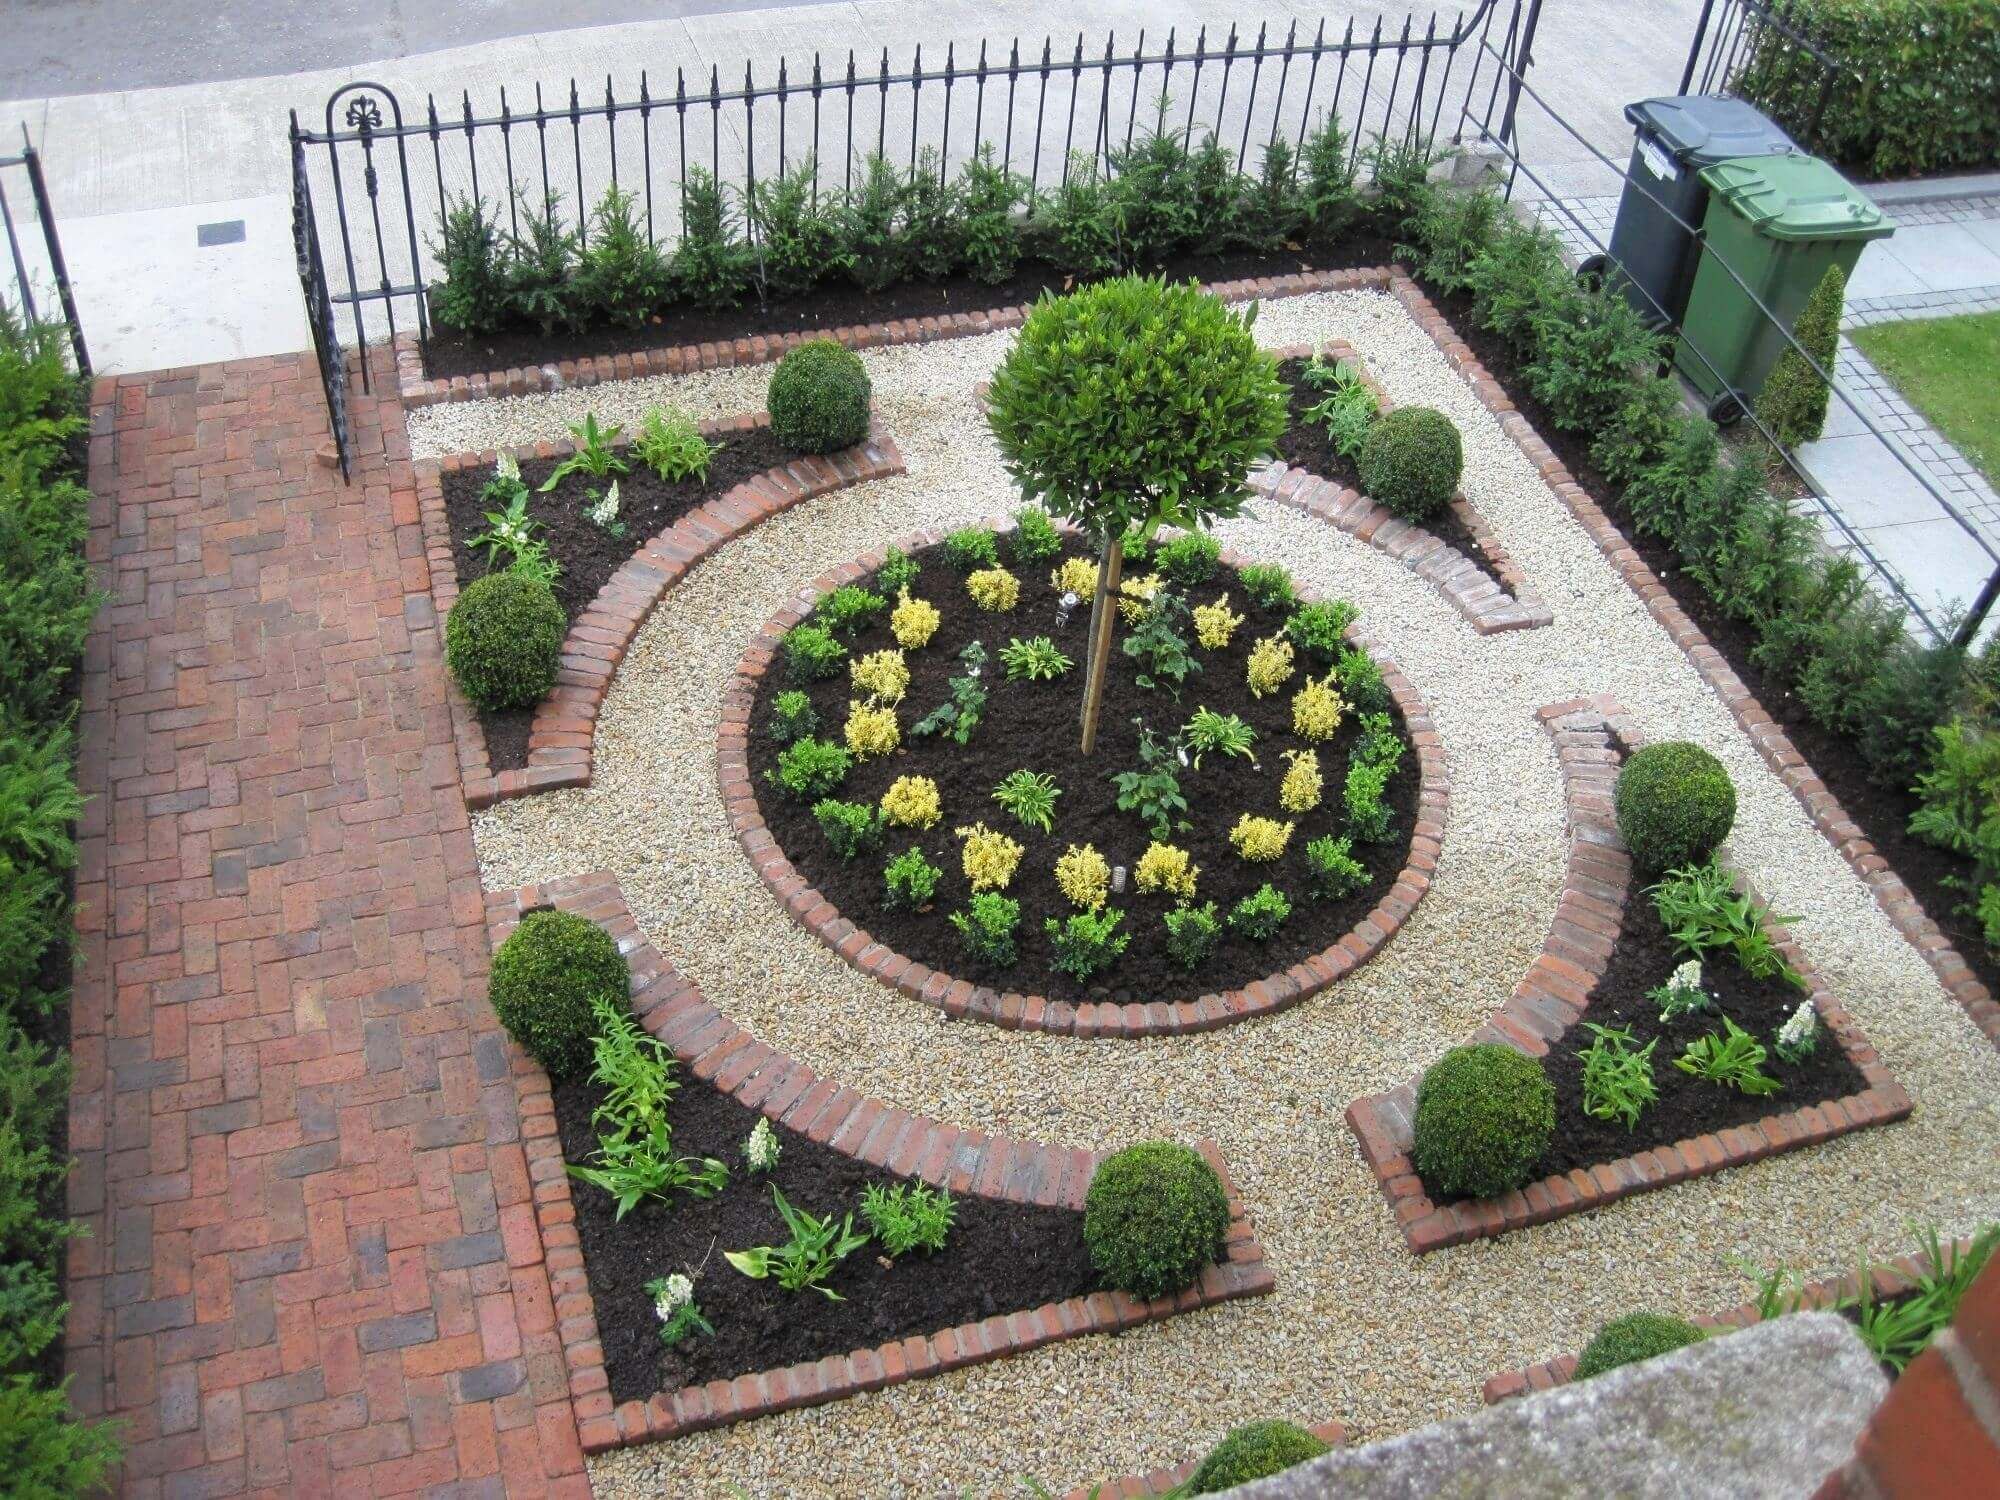 A garden with a circular garden design in the middle of it
